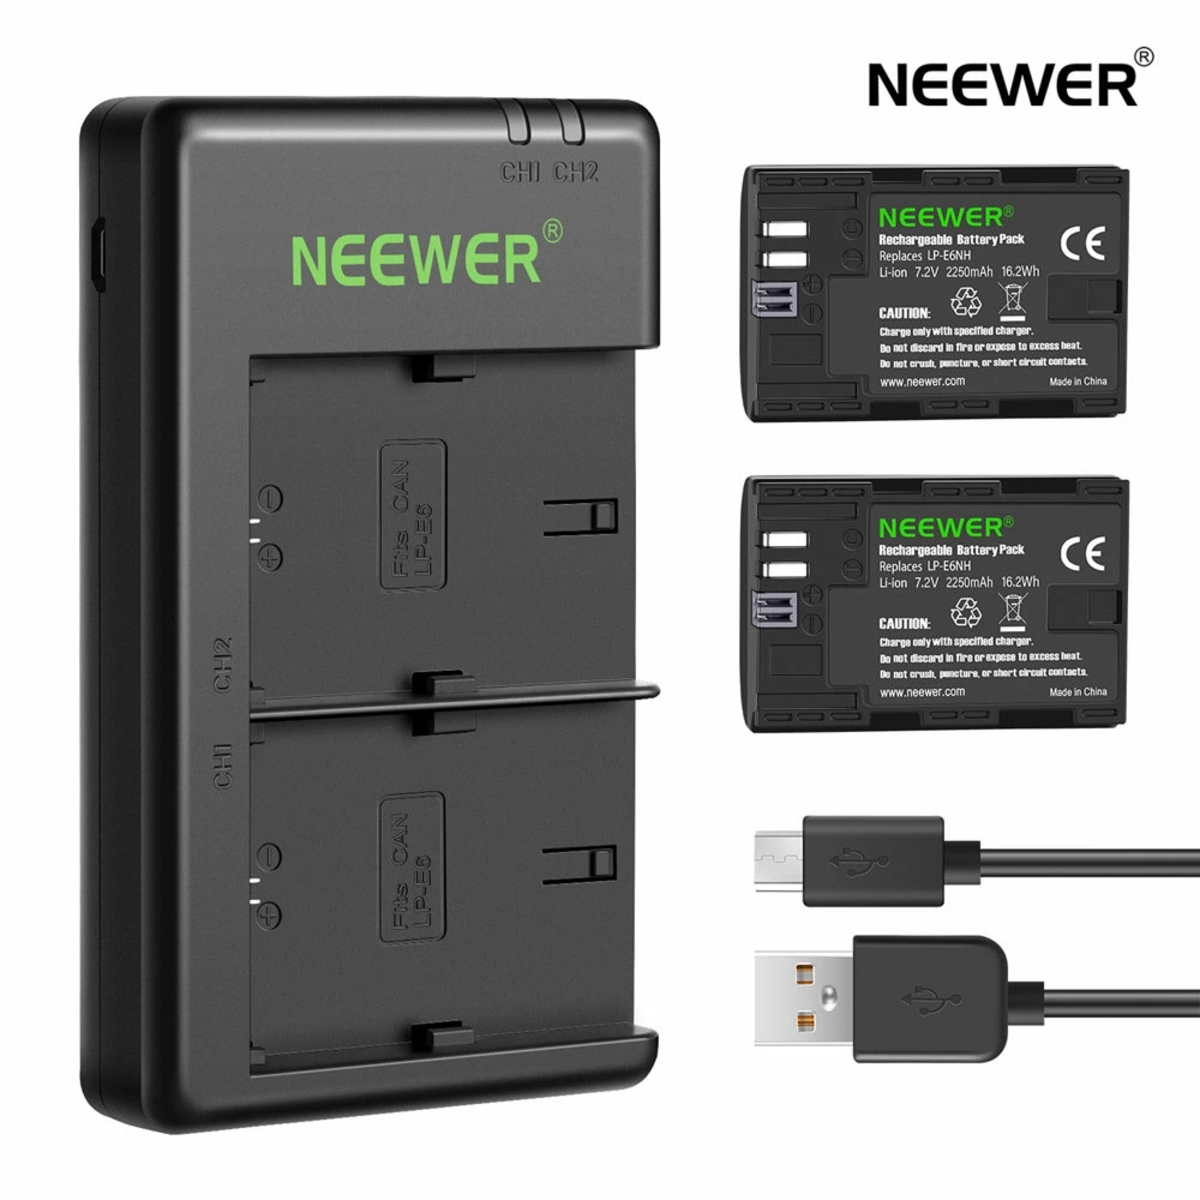 NEEWER 交換用LP-E6NHバッテリー/充電器セット